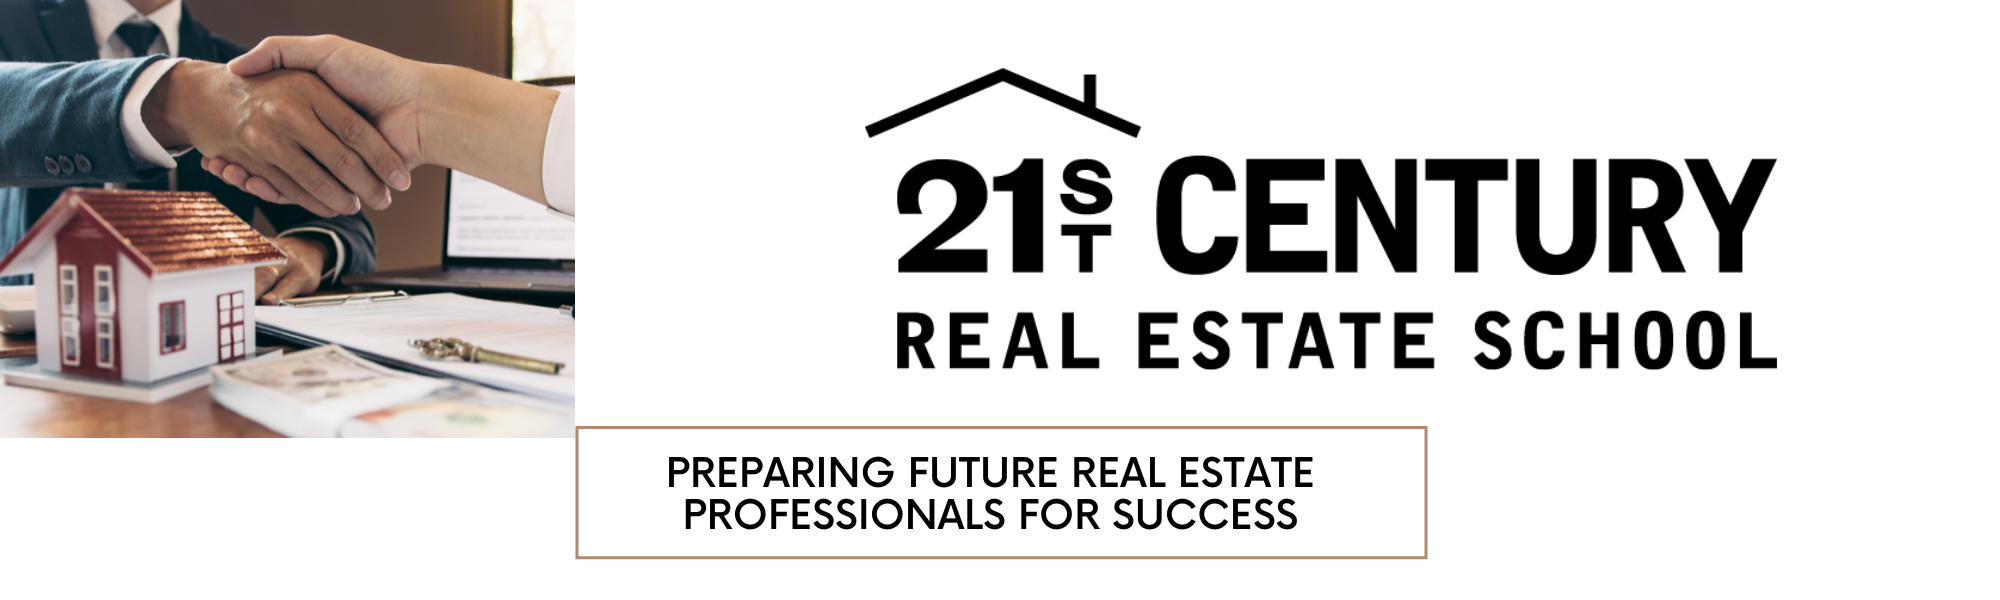 21st Century Real Estate School 